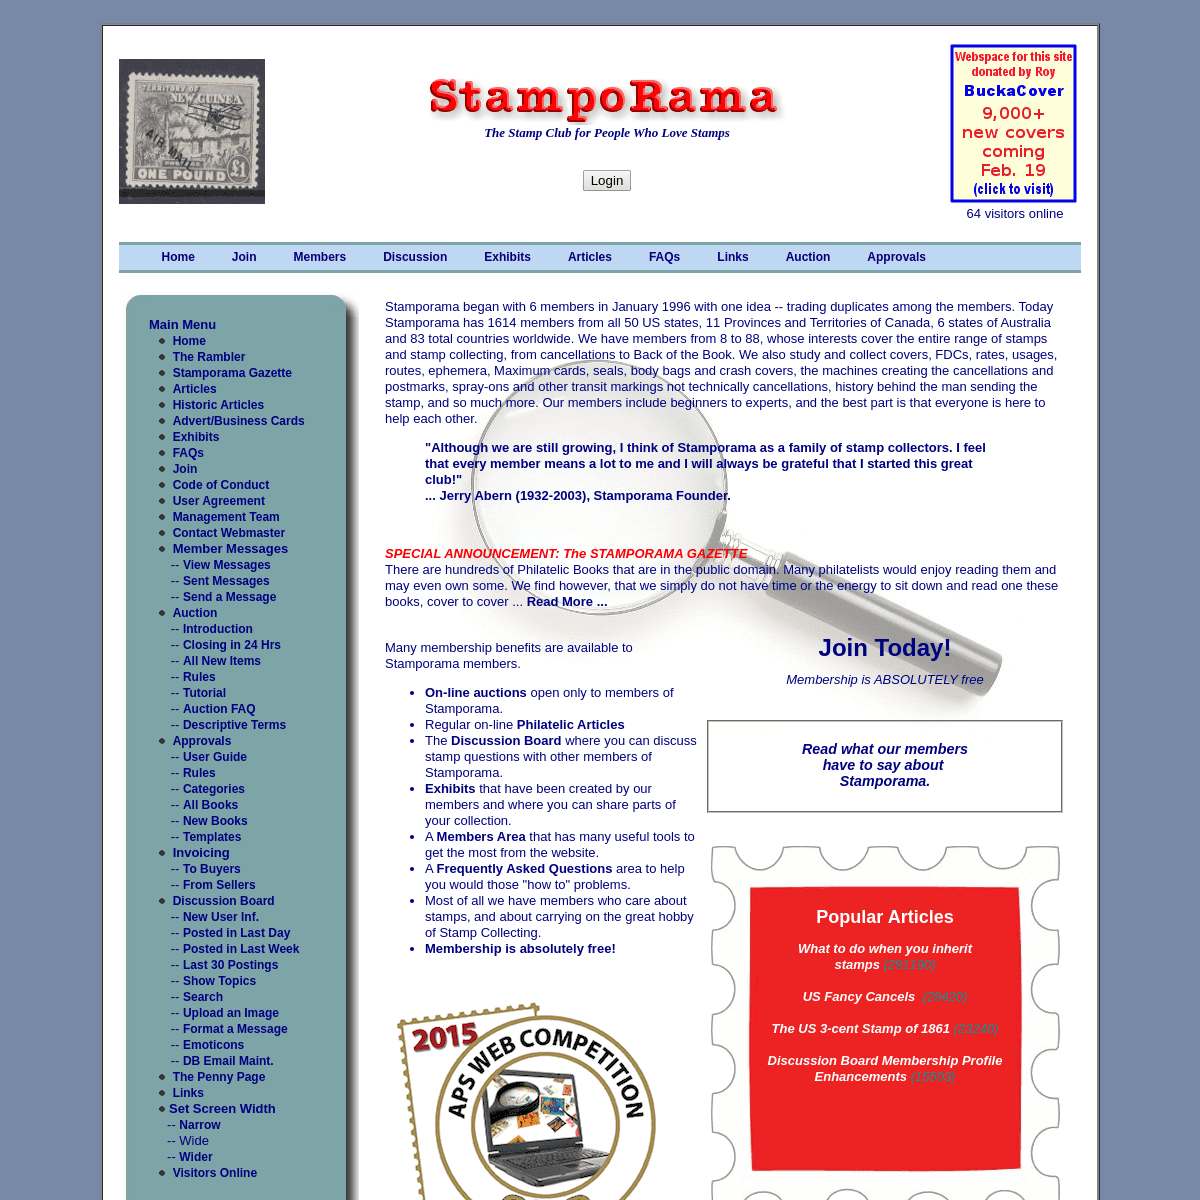 A complete backup of stamporama.com